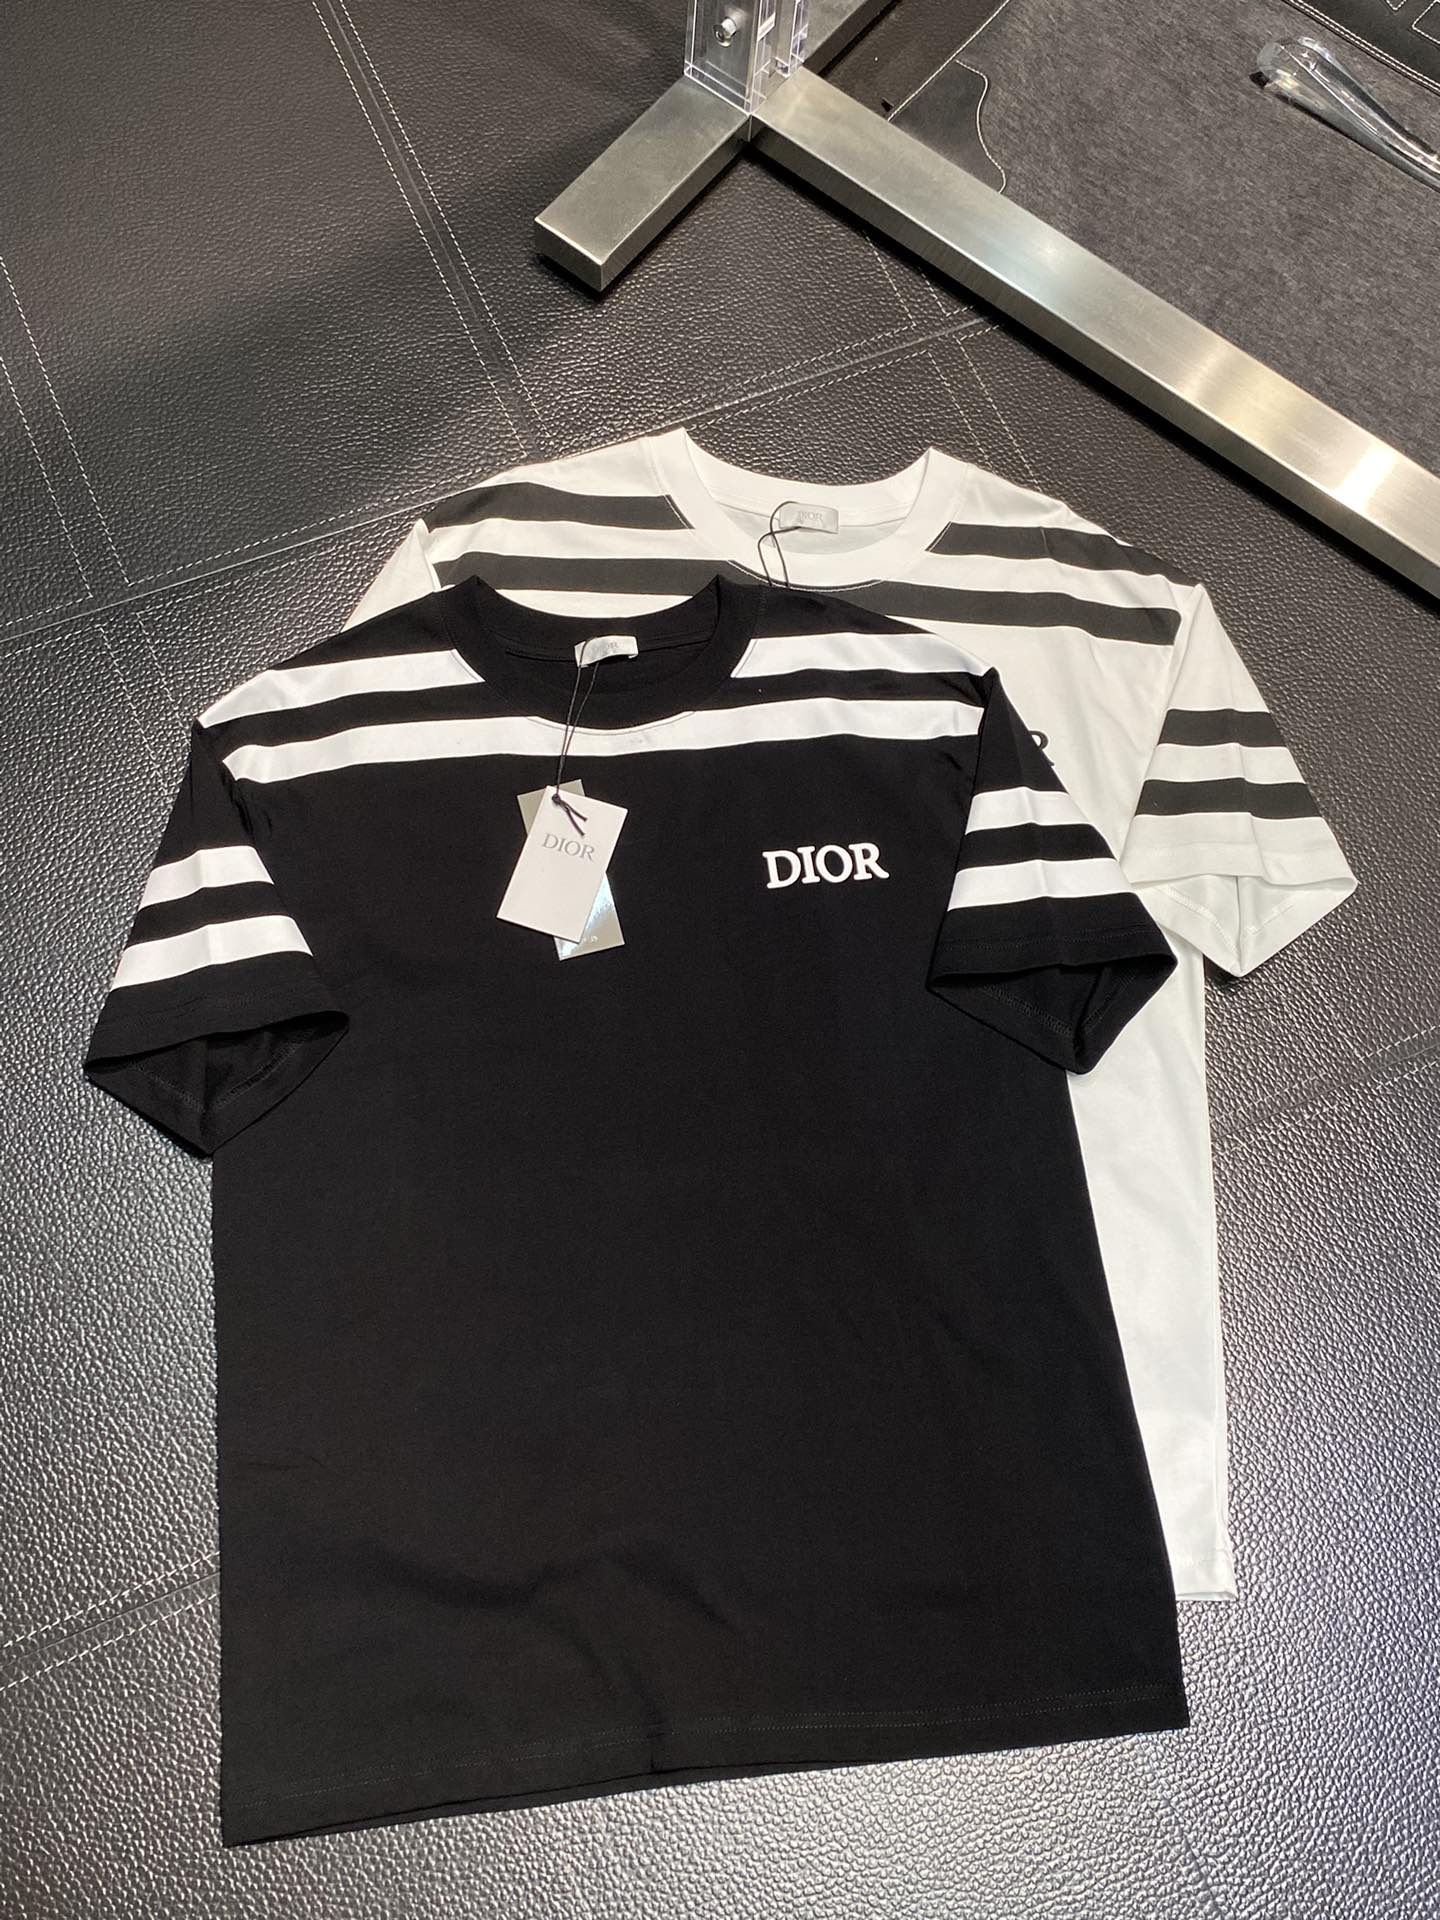 Dior Clothing T-Shirt Men Fashion Short Sleeve